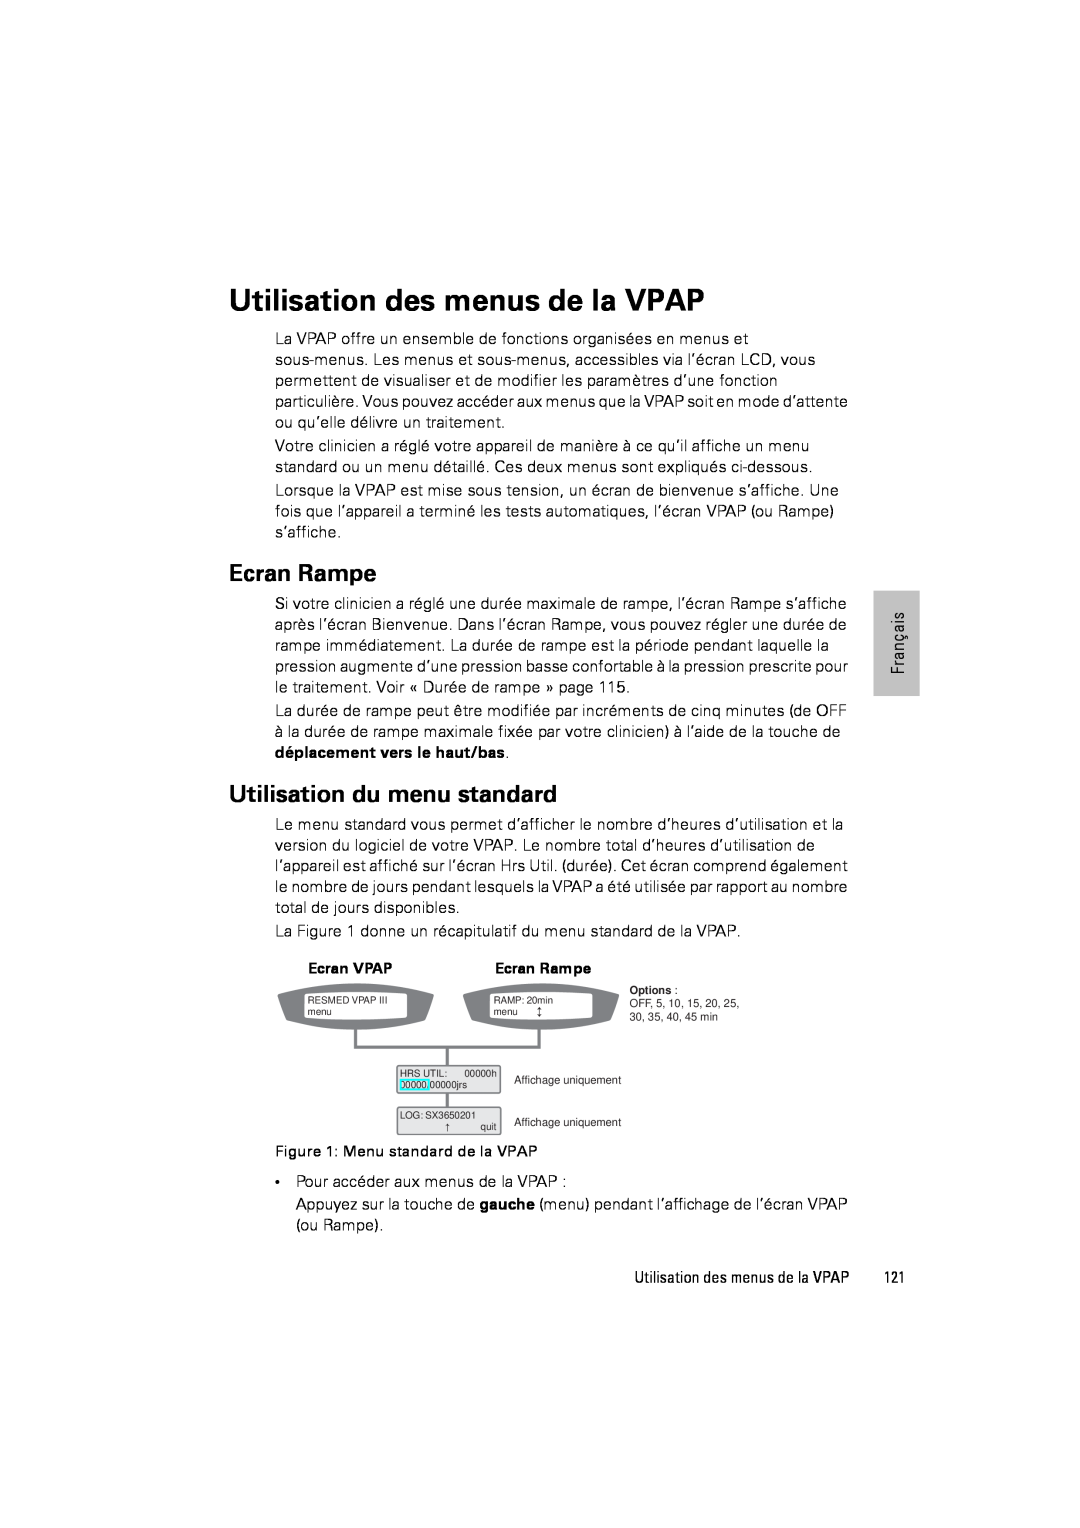 ResMed III & III ST user manual Utilisation des menus de la VPAP, Ecran Rampe, Utilisation du menu standard 